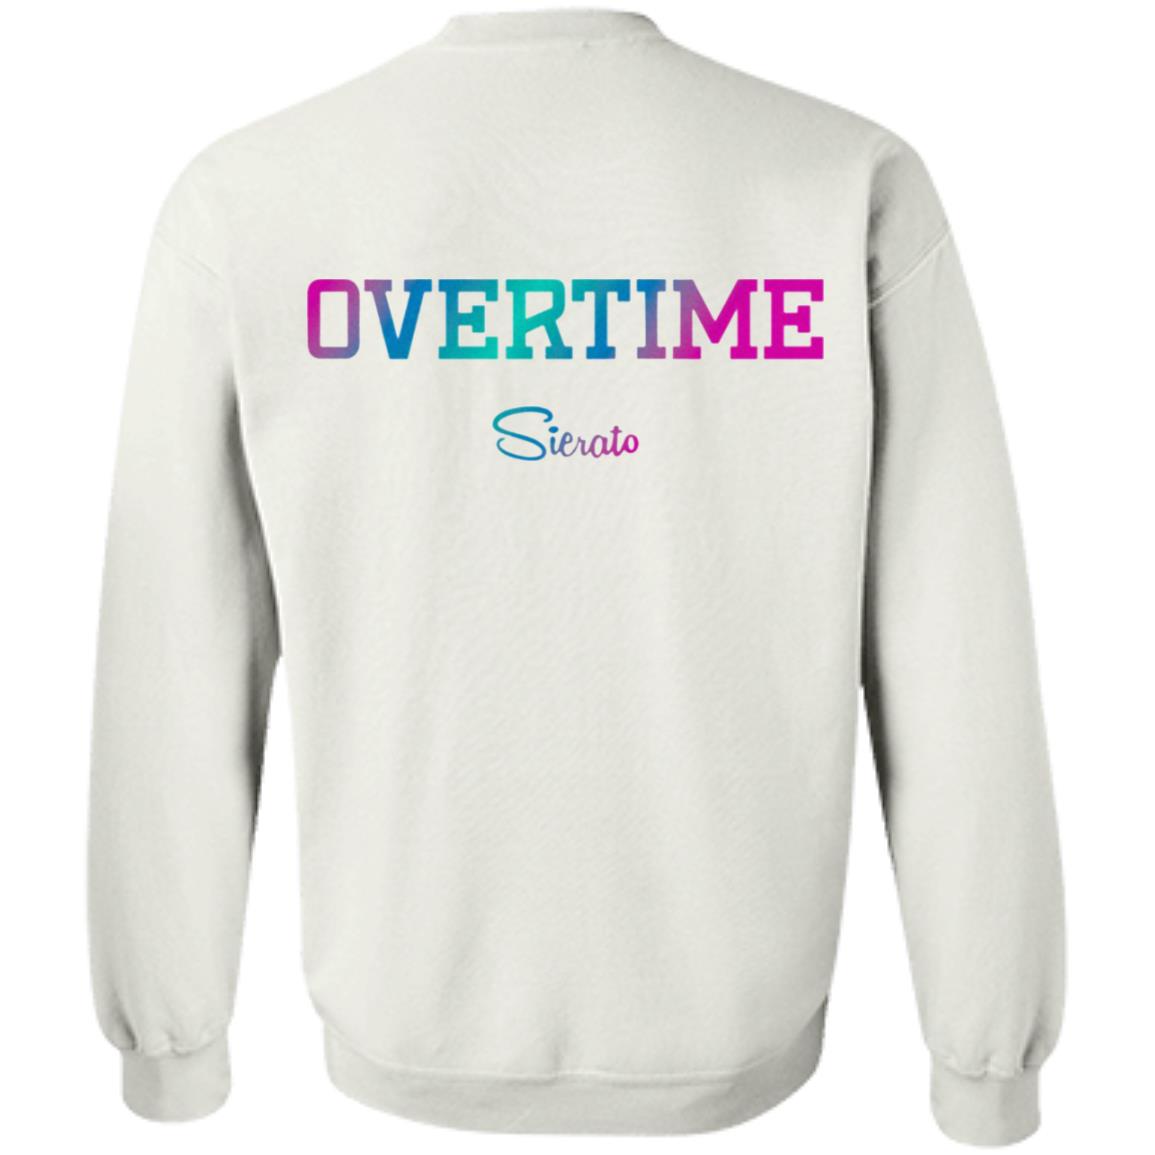 Shop Overtime – OVERTIME